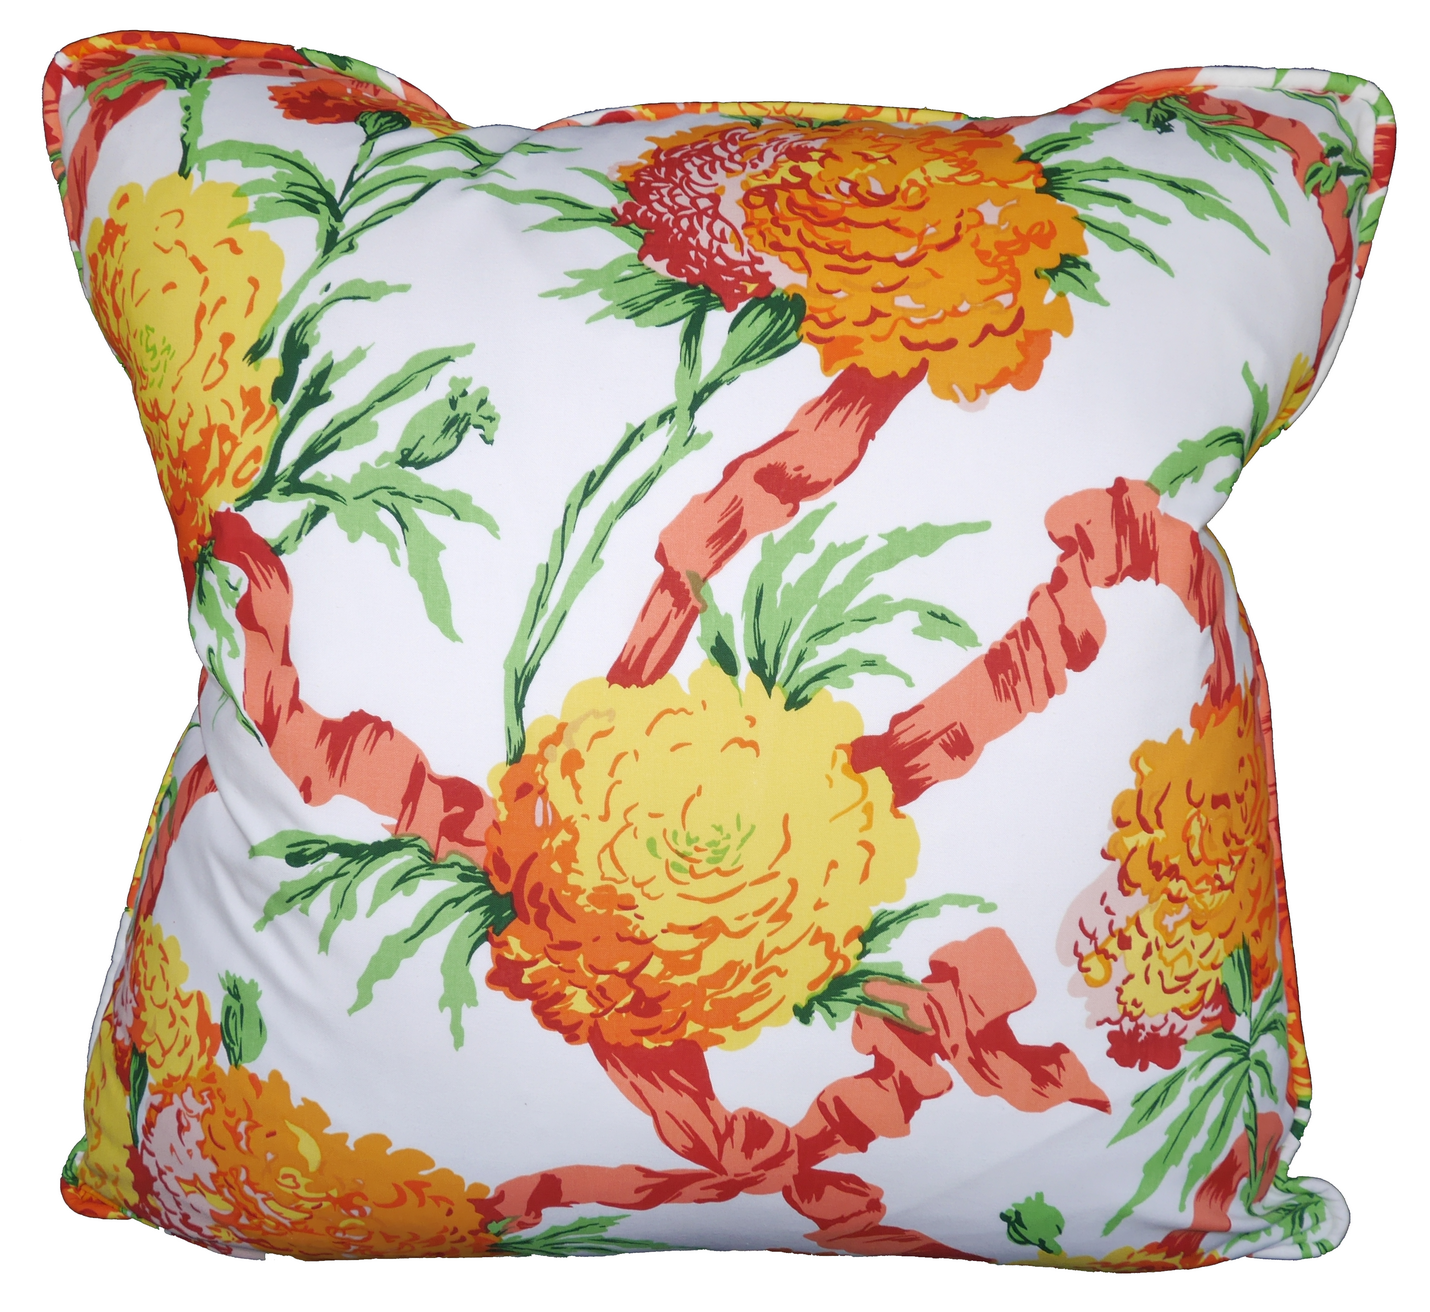 Marigolds Throw Pillow Cover - Carleton Varney